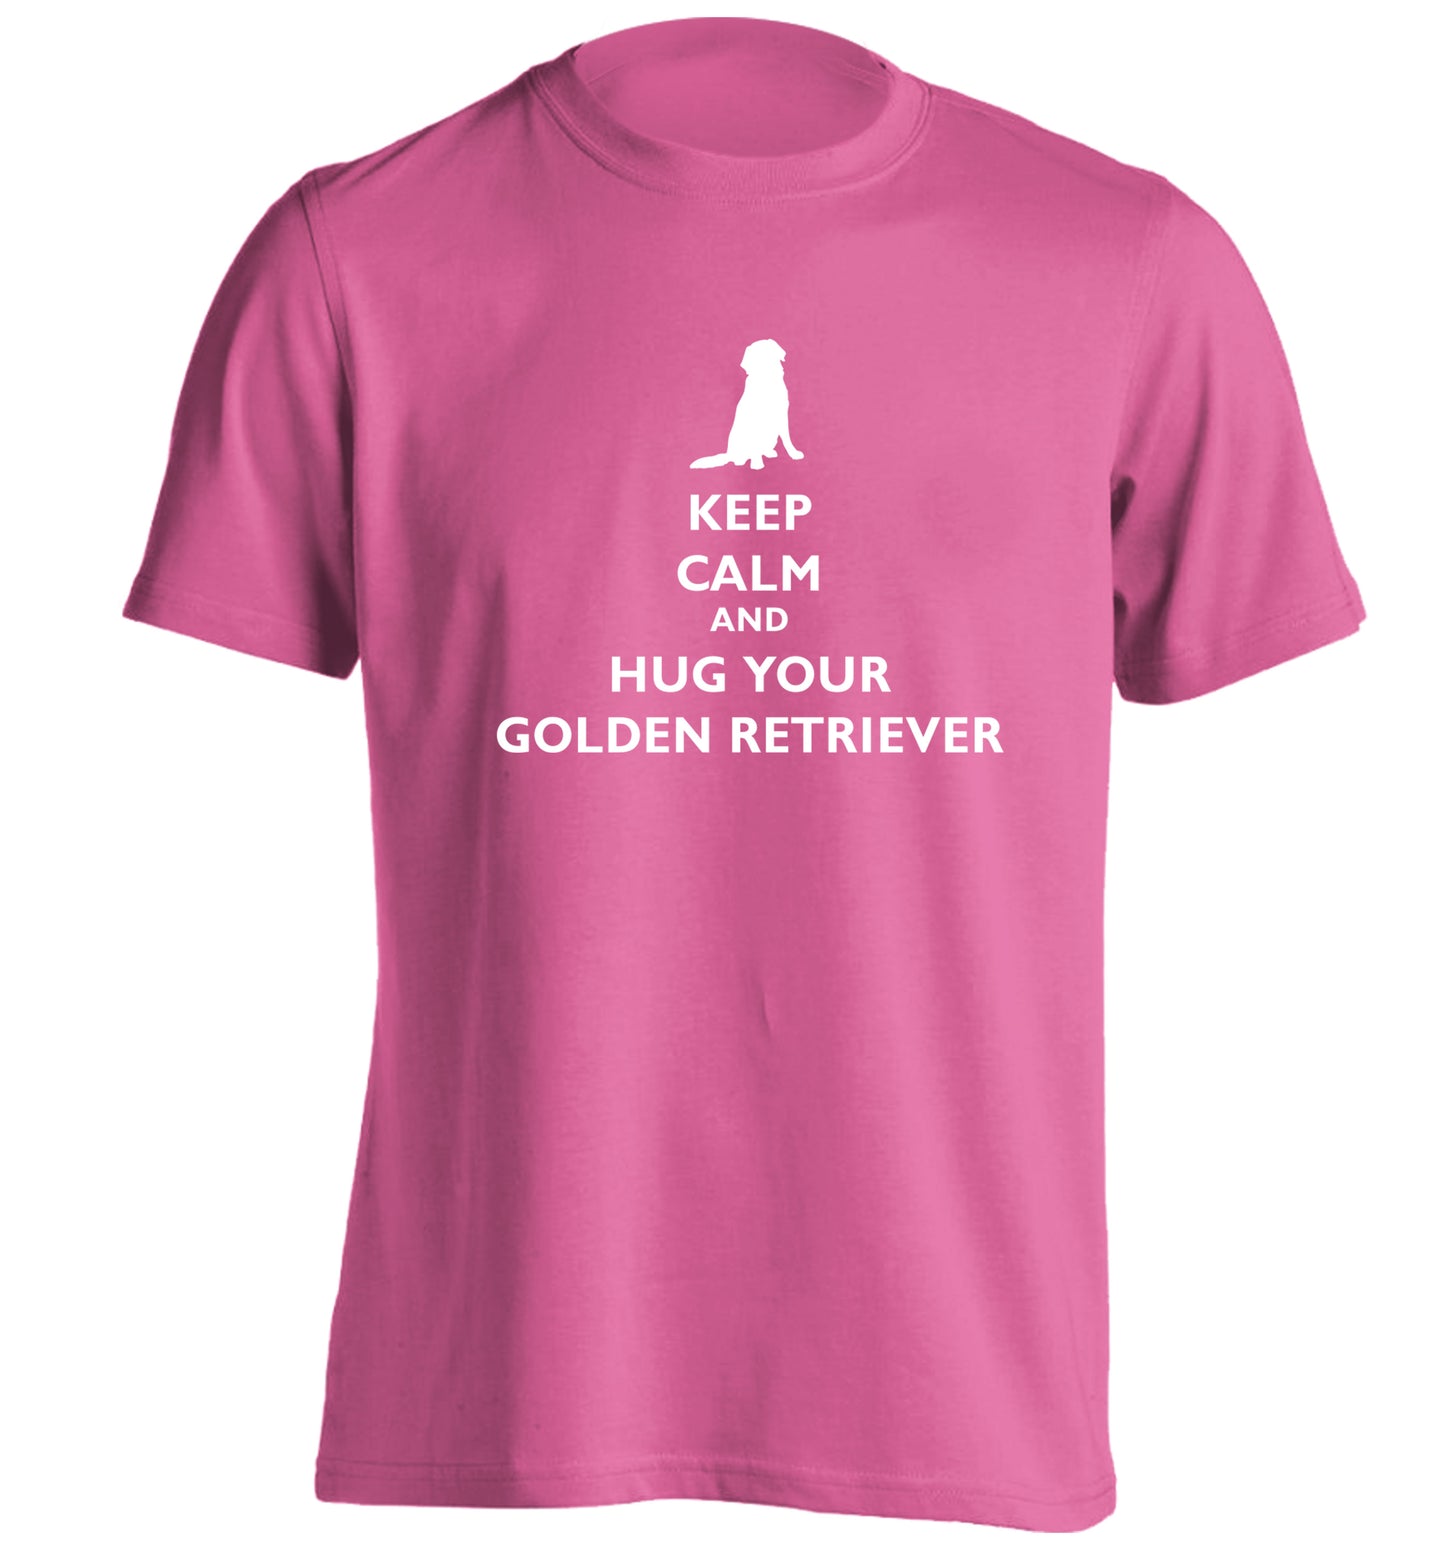 Keep calm and hug your golden retriever adults unisex pink Tshirt 2XL